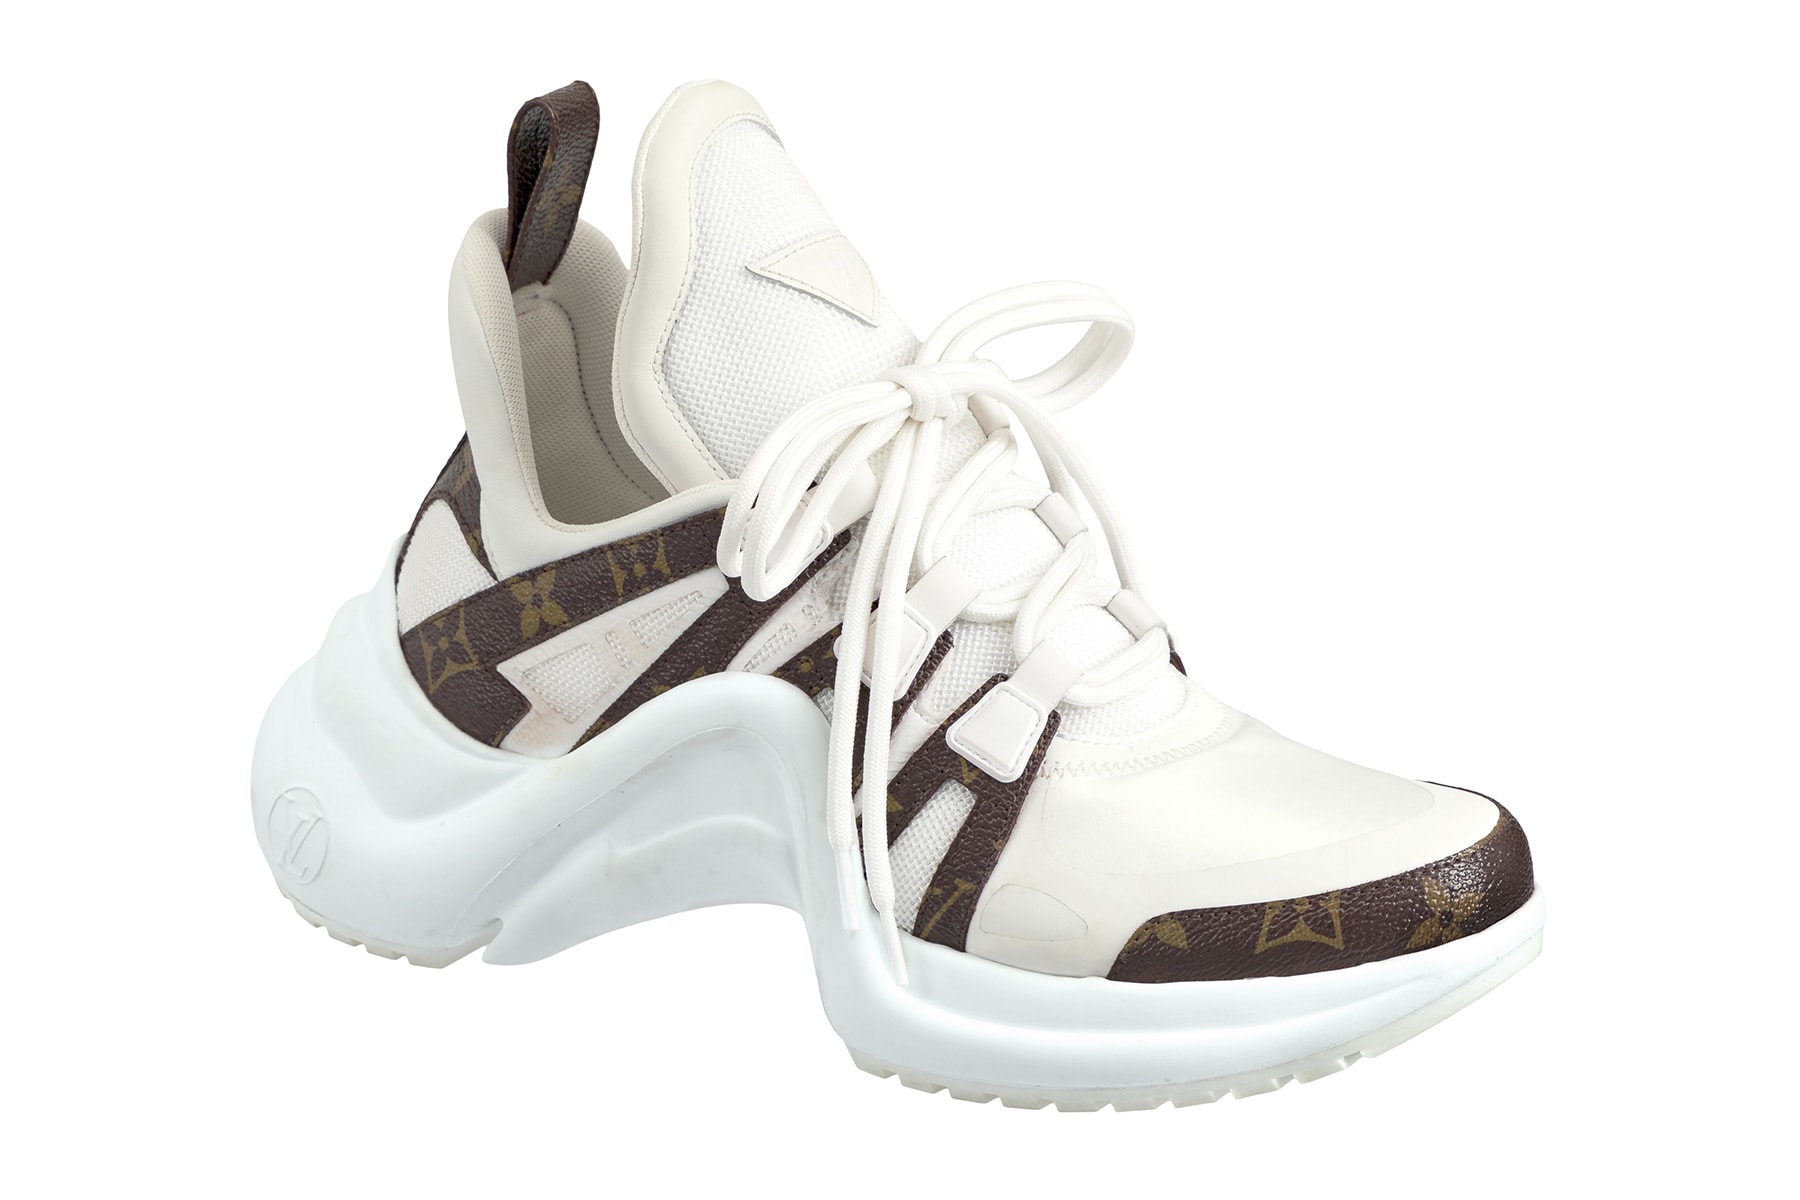 LV Archlight Sneaker - Women - Shoes